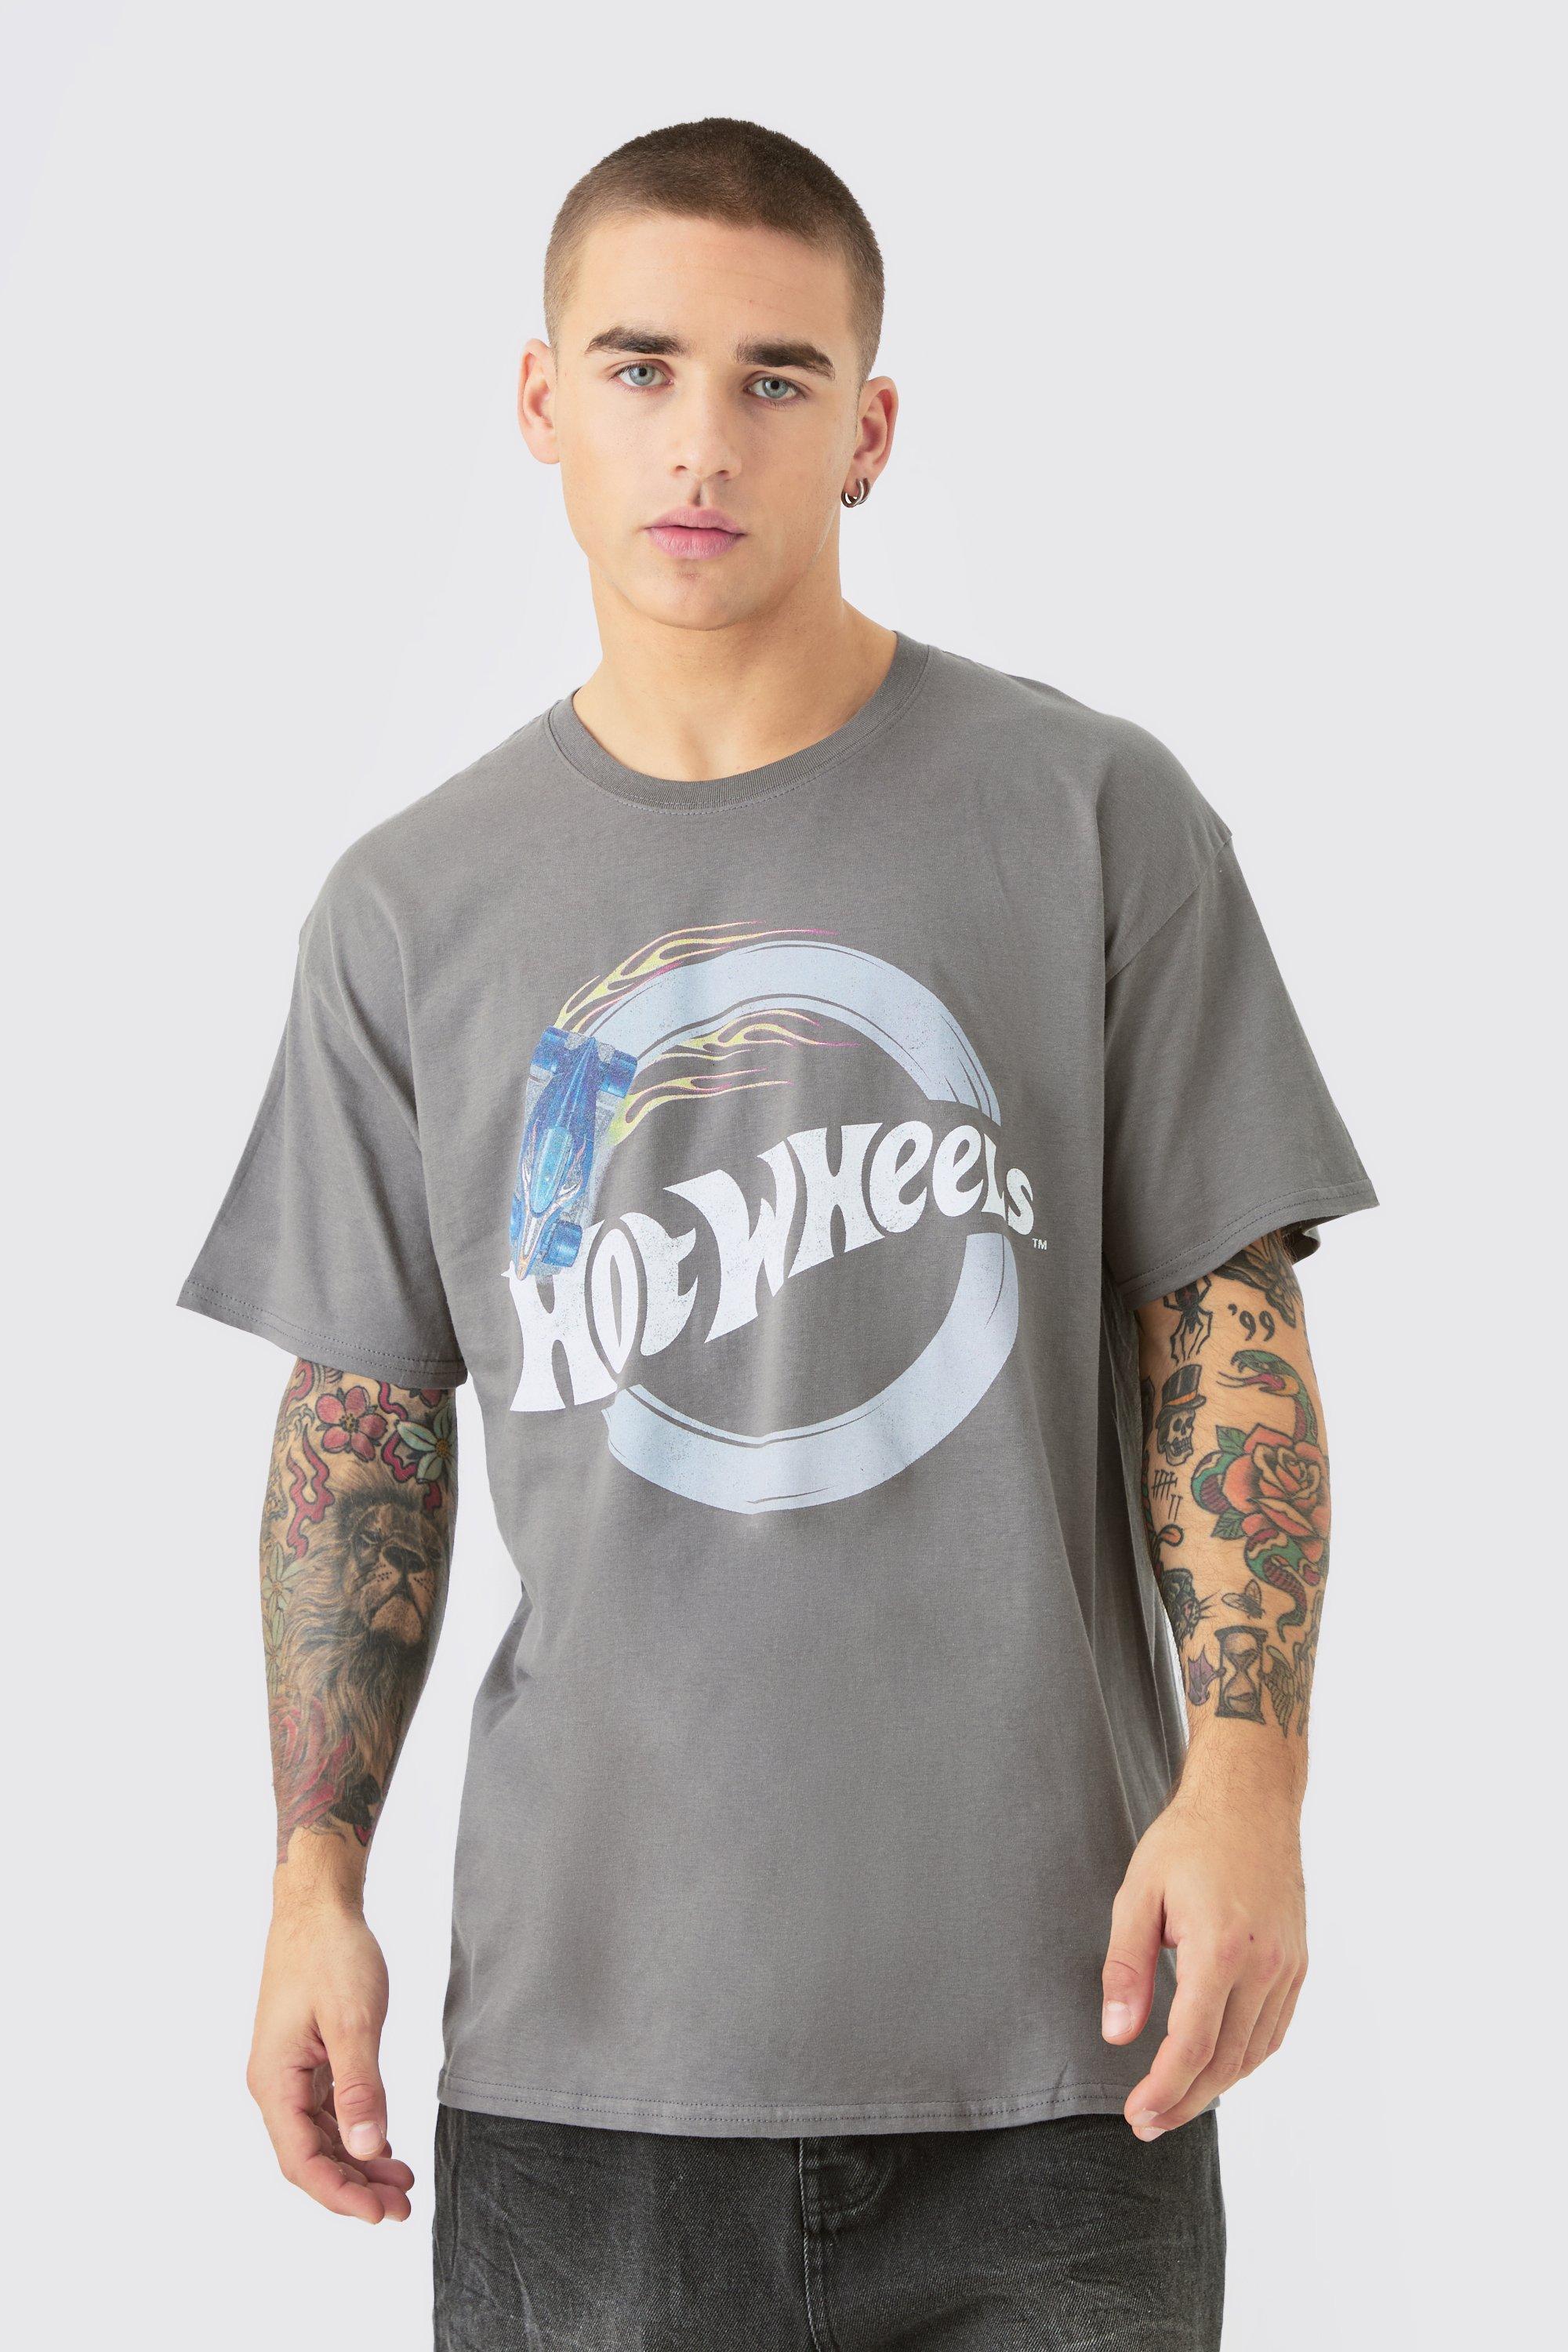 Image of Oversized Hotwheels License T-shirt, Grigio